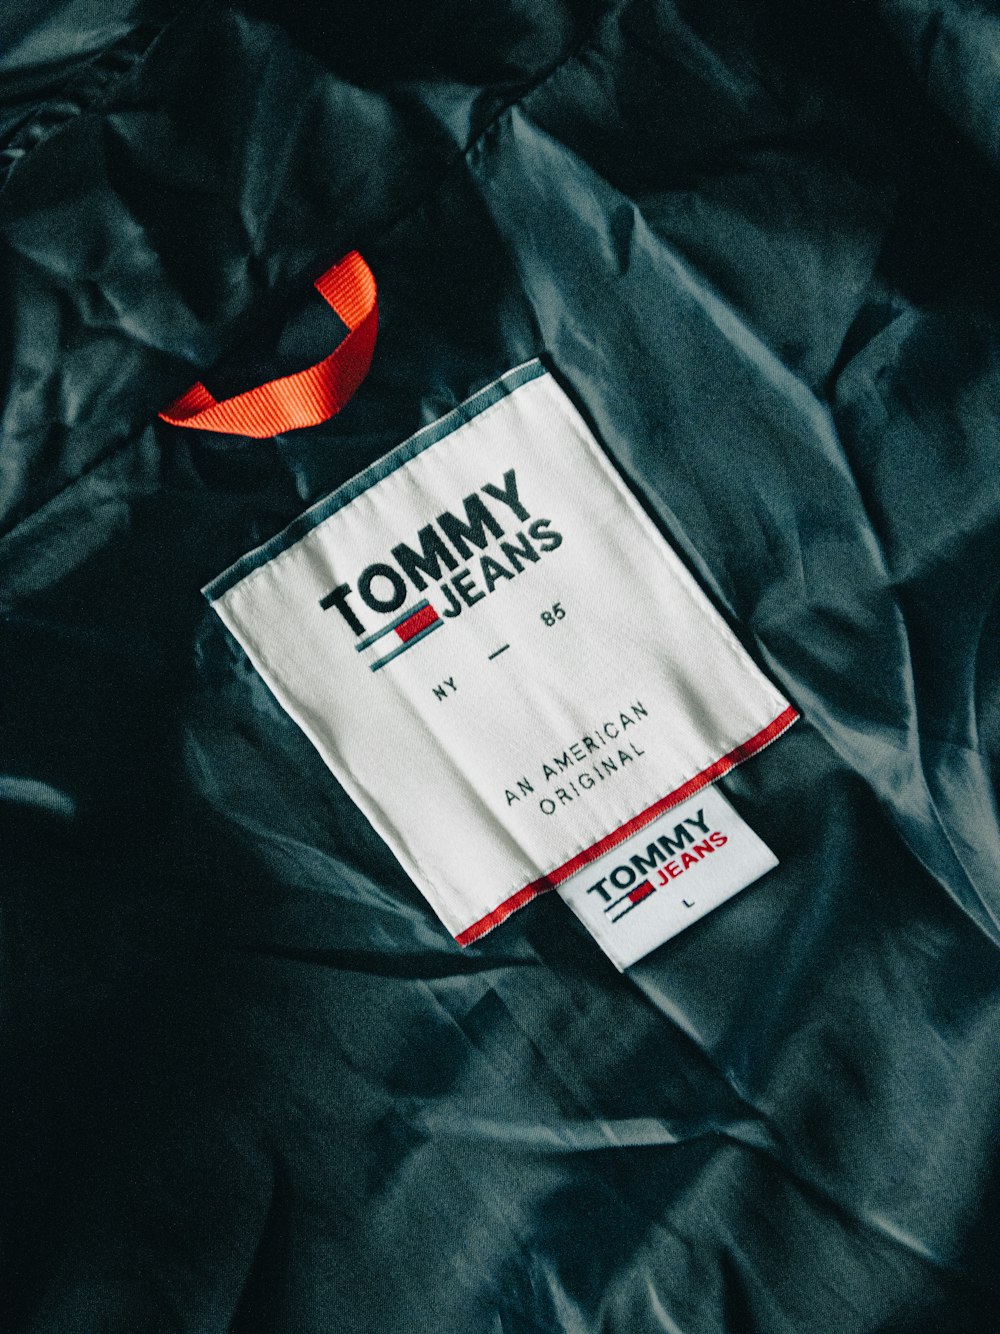 a tommy hilfiger label on a black jacket